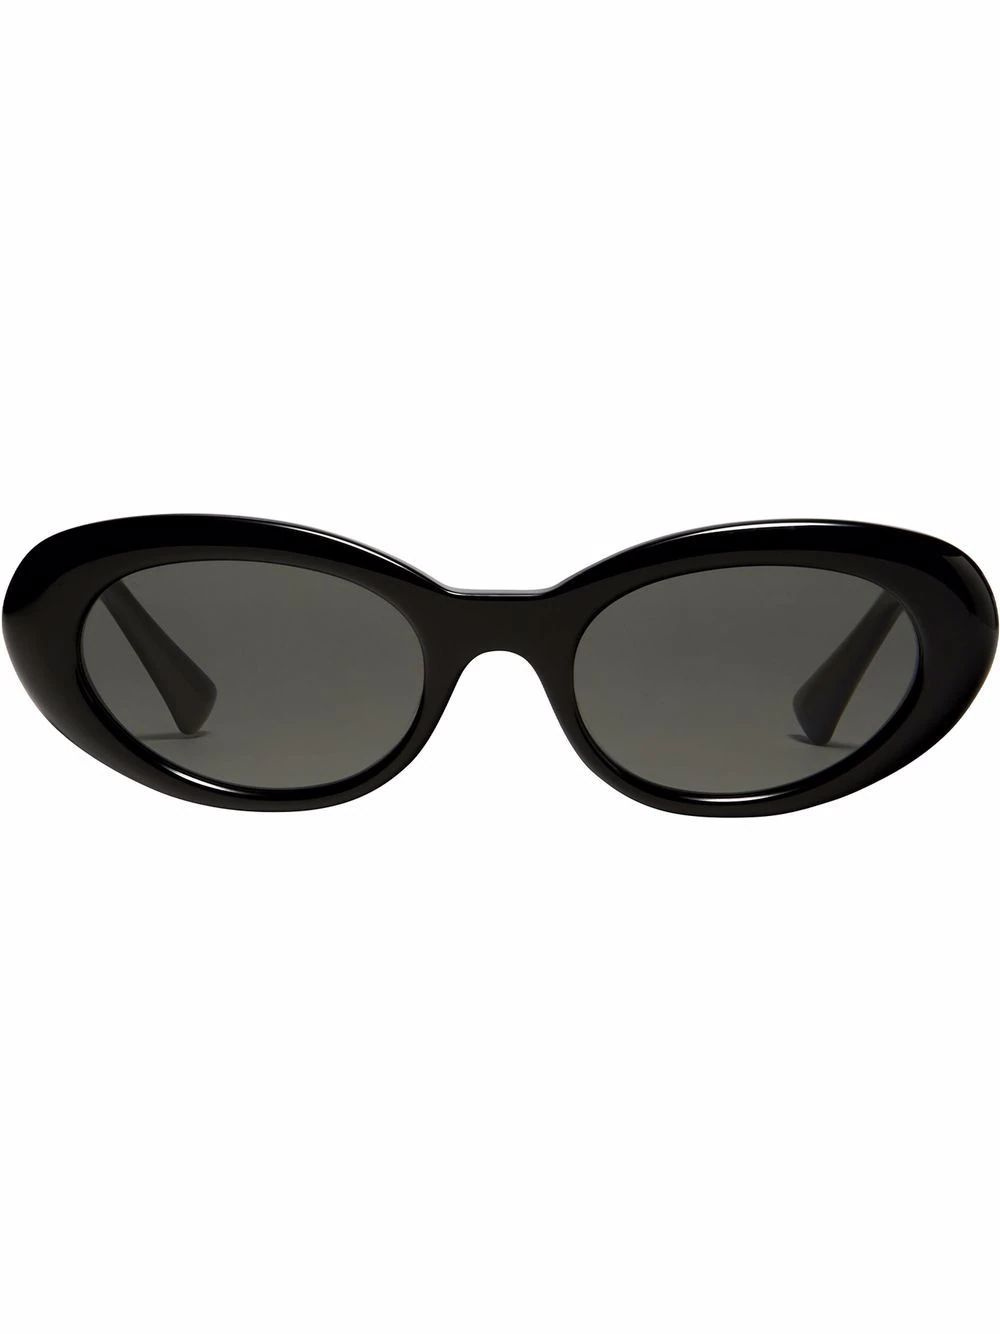 Le 01 cat-eye sunglasses | Farfetch Global